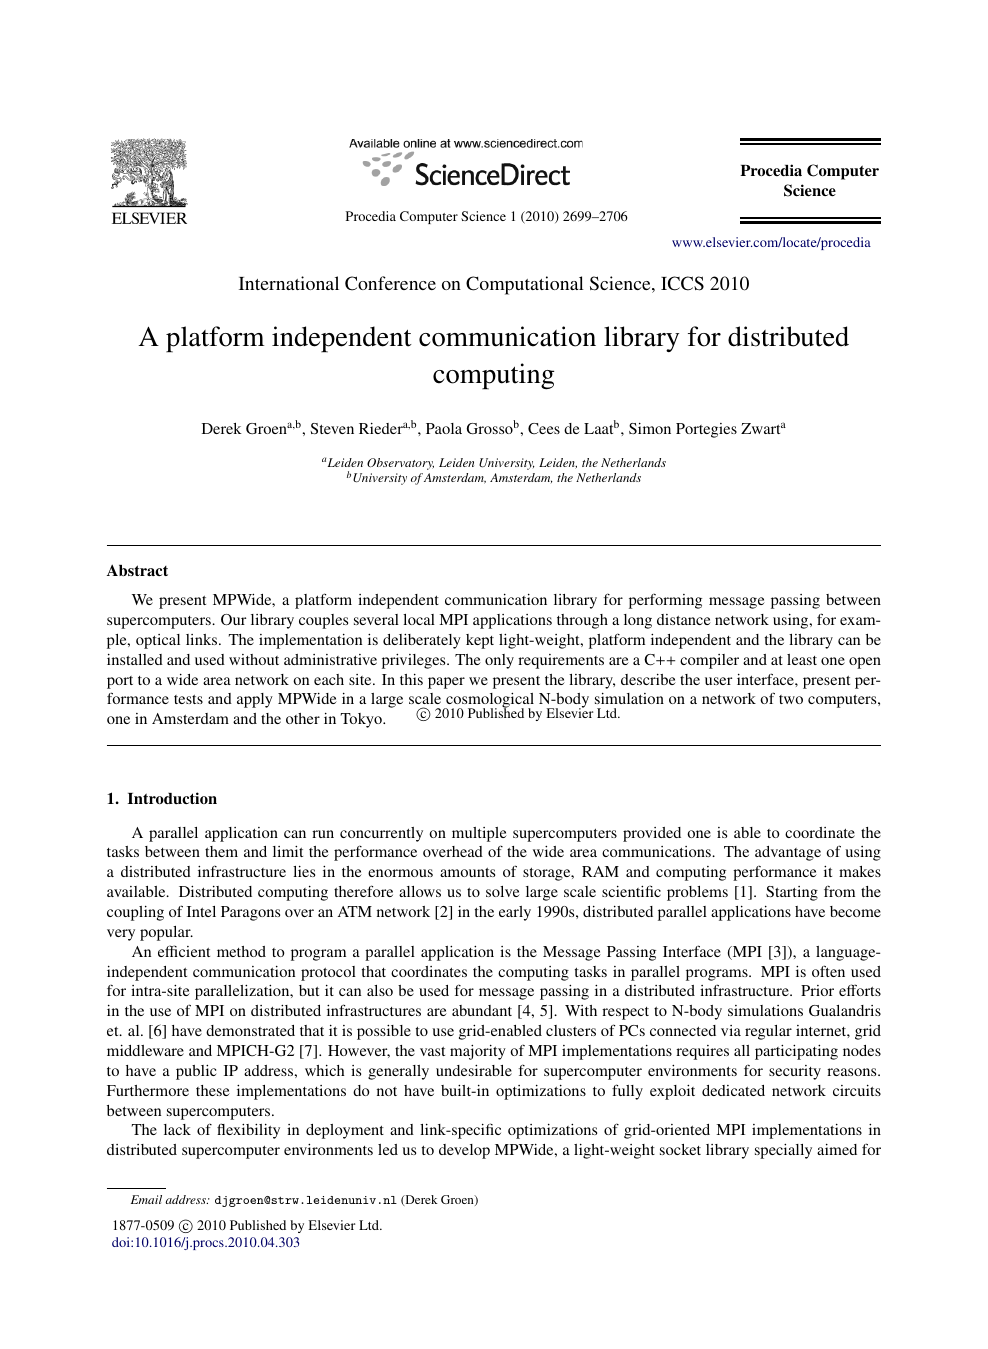 Distributed computing thesis